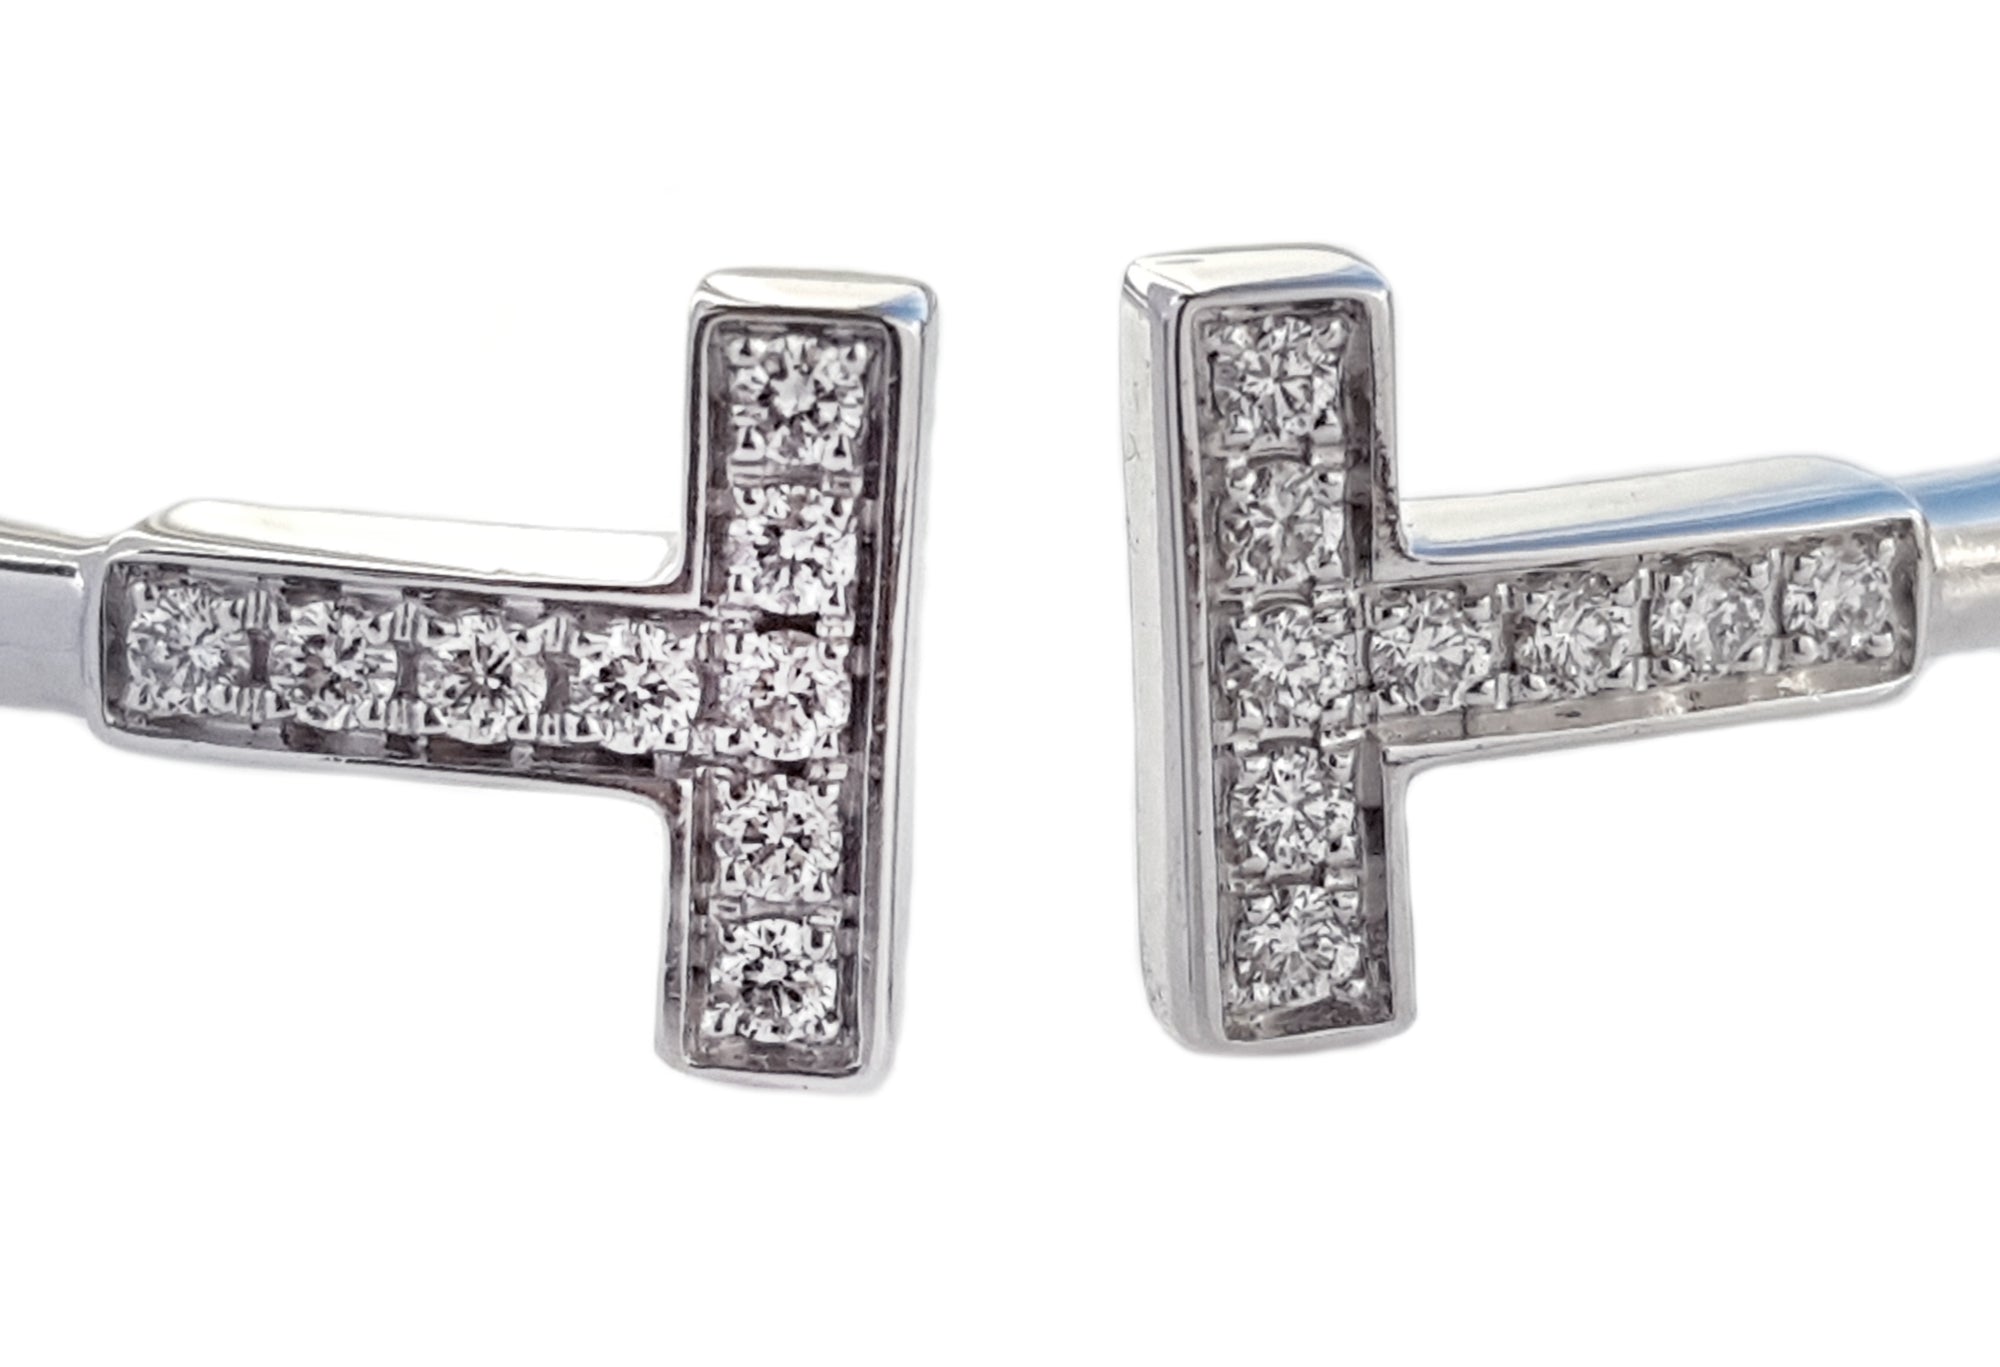 Tiffany & Co. 750 White Gold Diamond Wire T Bracelet